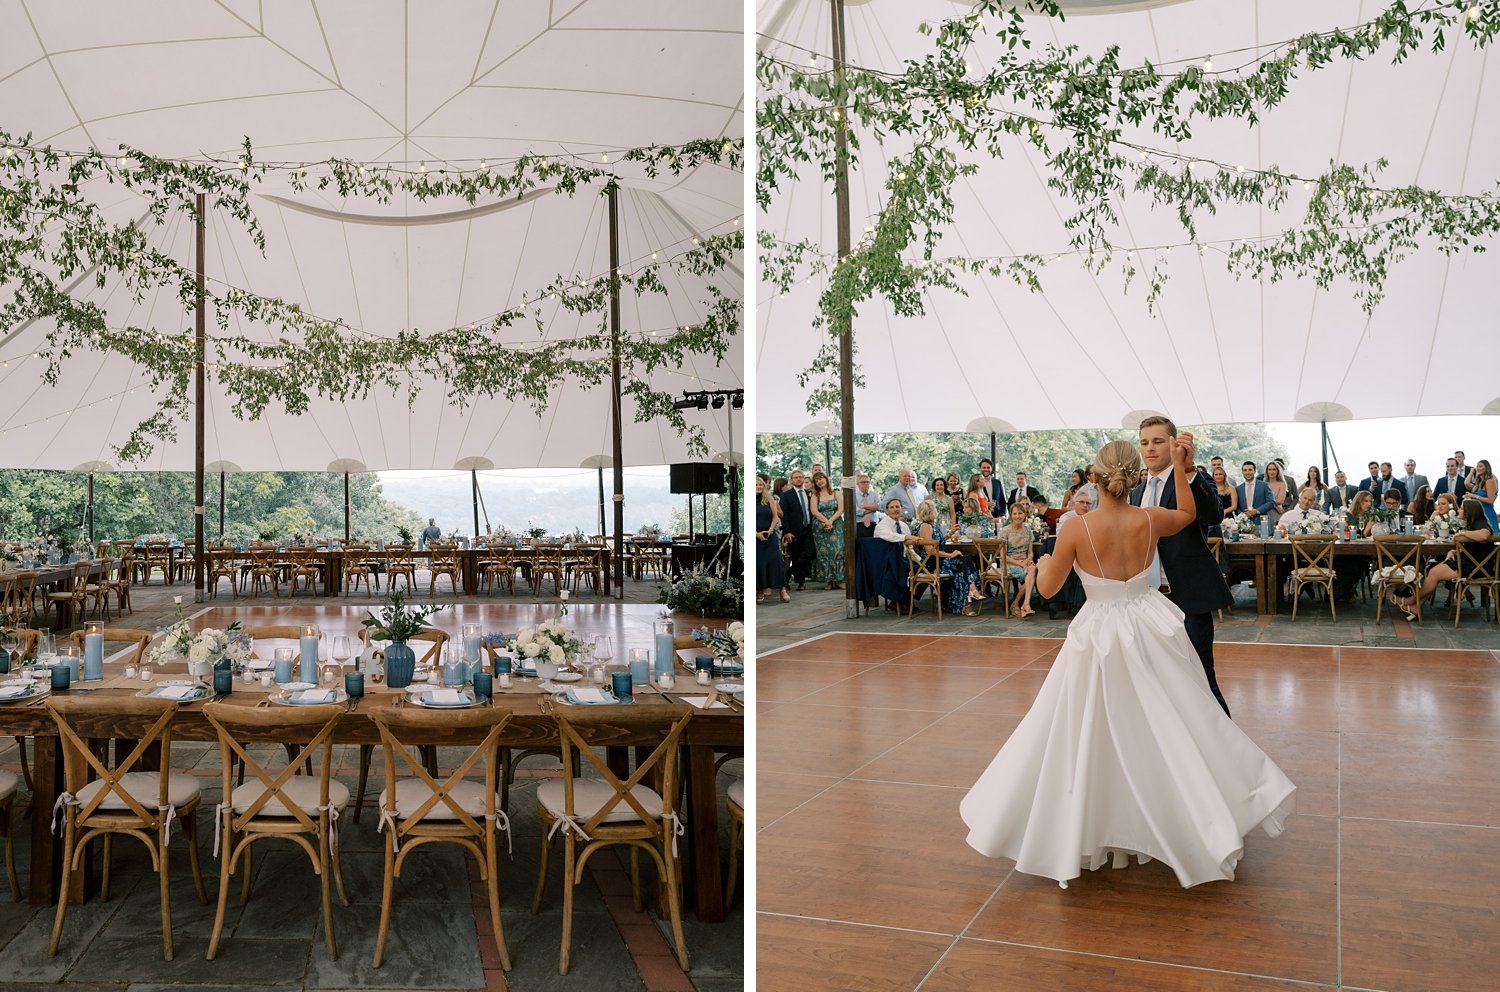 groom twirls bride on dance floor under greenery filled tent